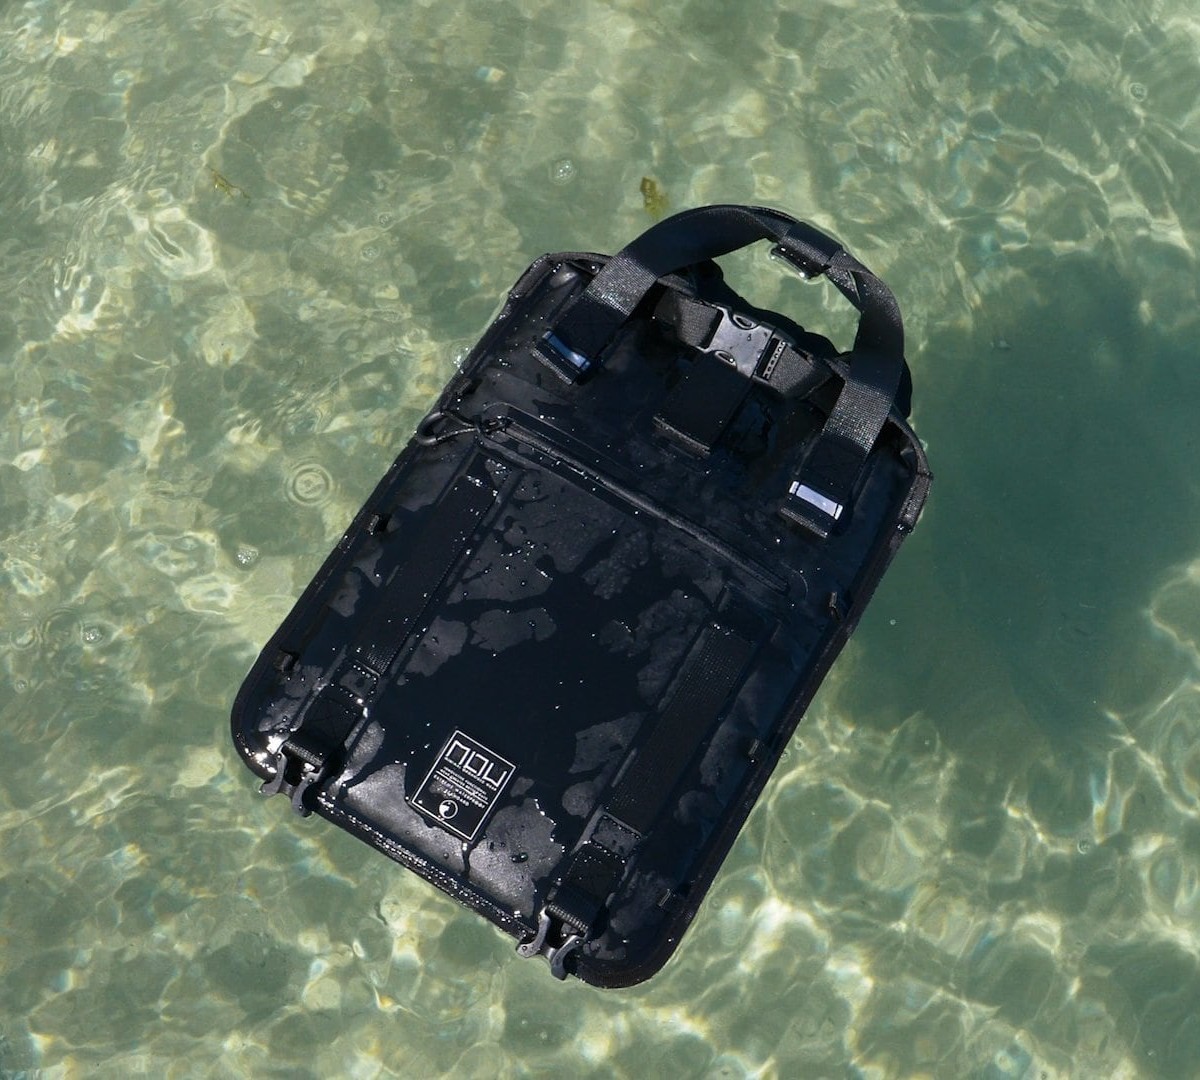 UNICO Waterproof Digital Bags have endless configurations